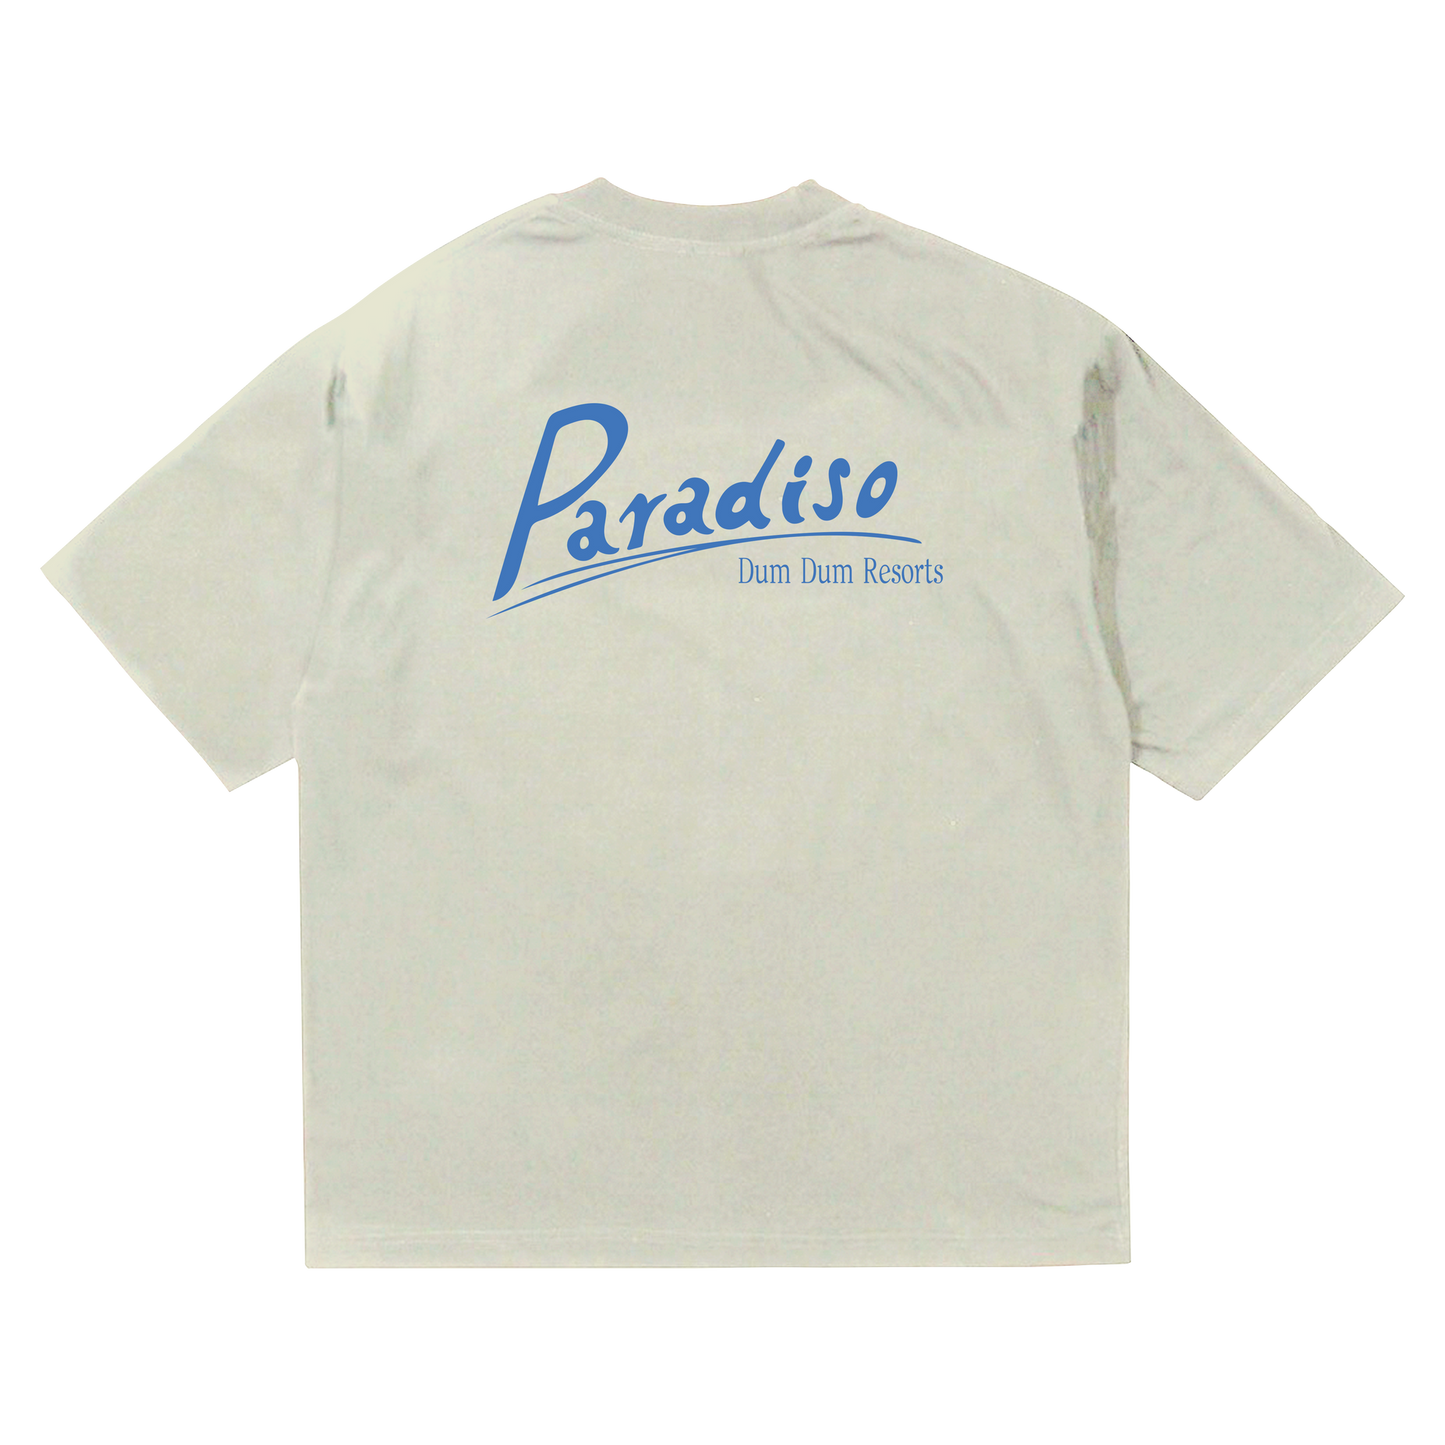 Dominga in Paradiso T-Shirt